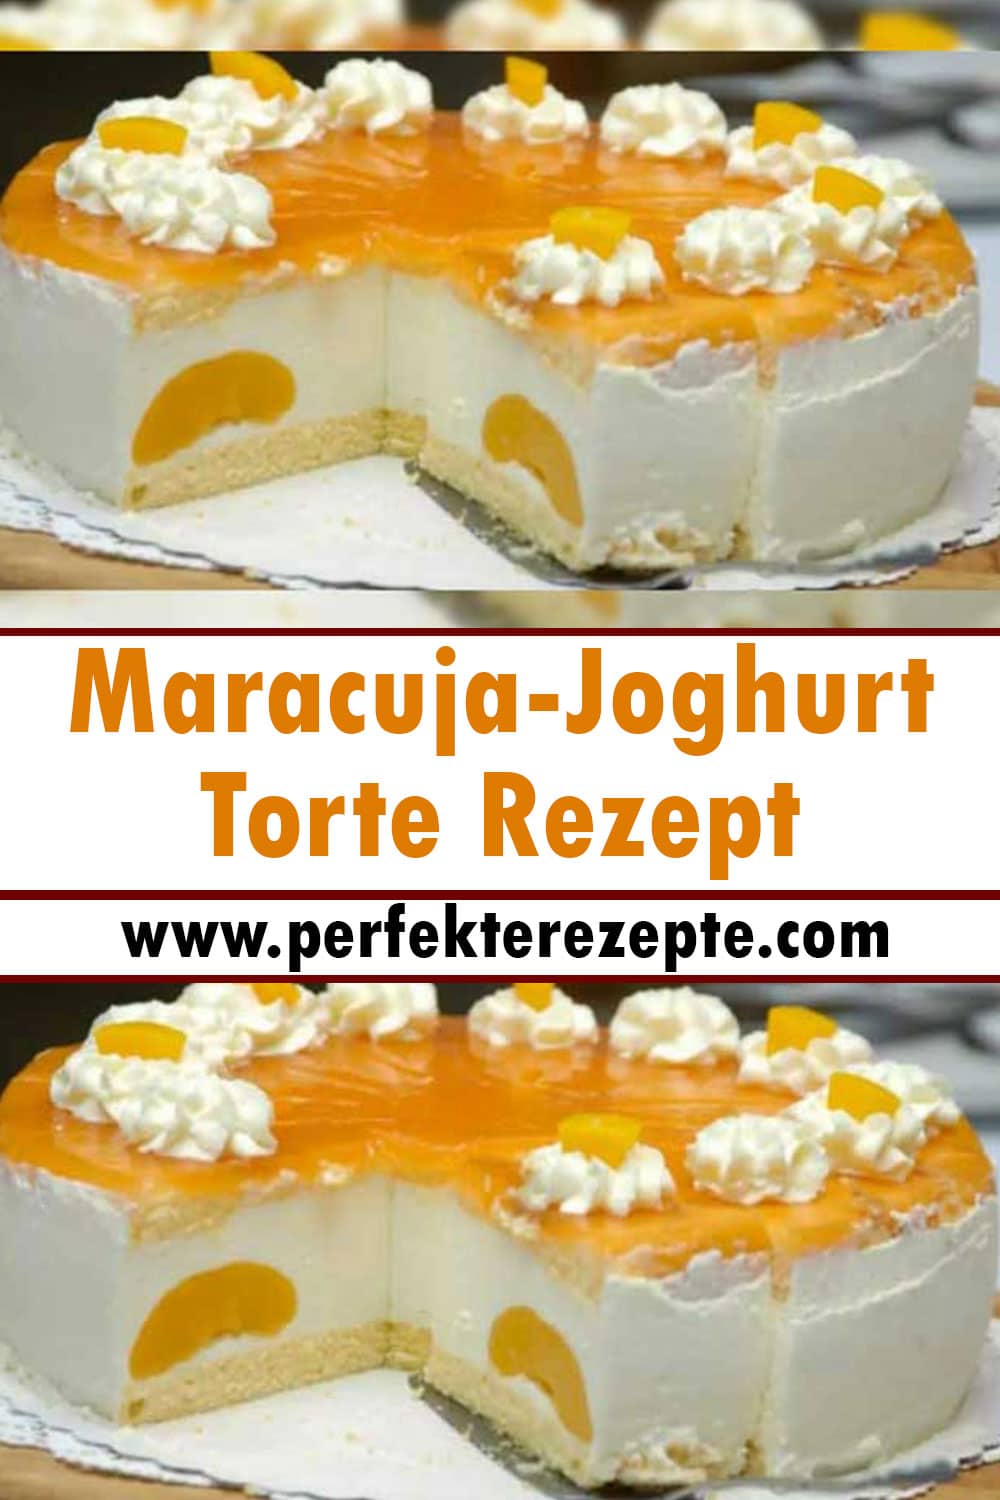 Maracuja-Joghurt-Torte Rezept